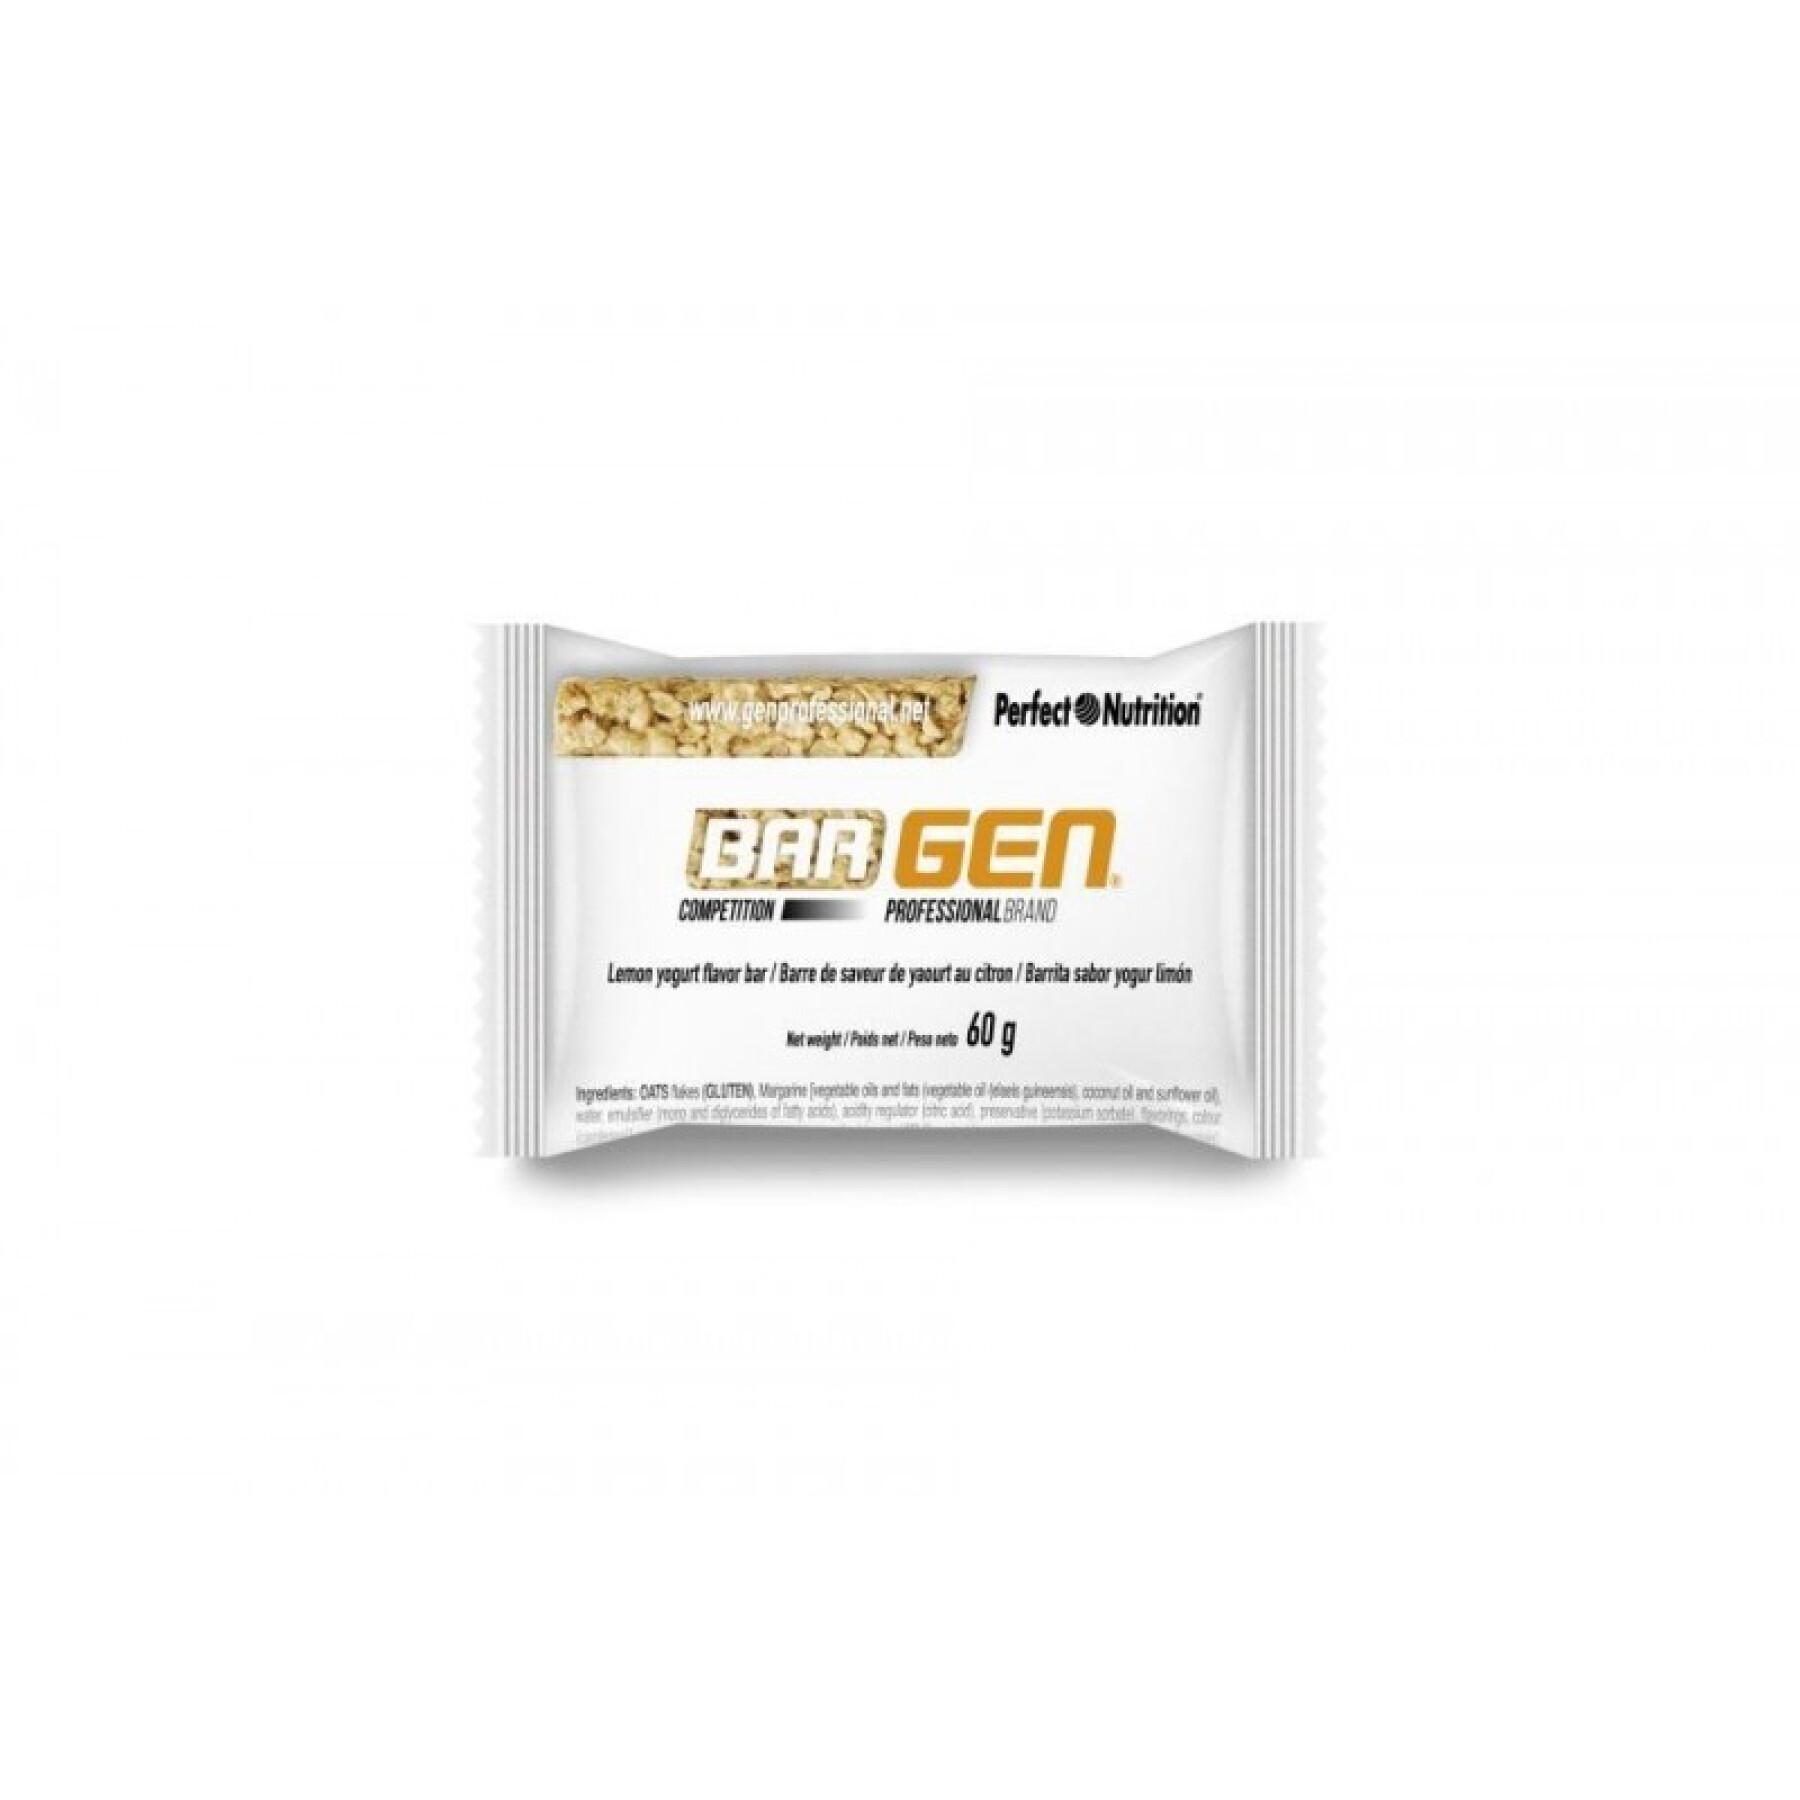 Box of 40 nutrition bars Gen Professional Bargen Competition Lemon